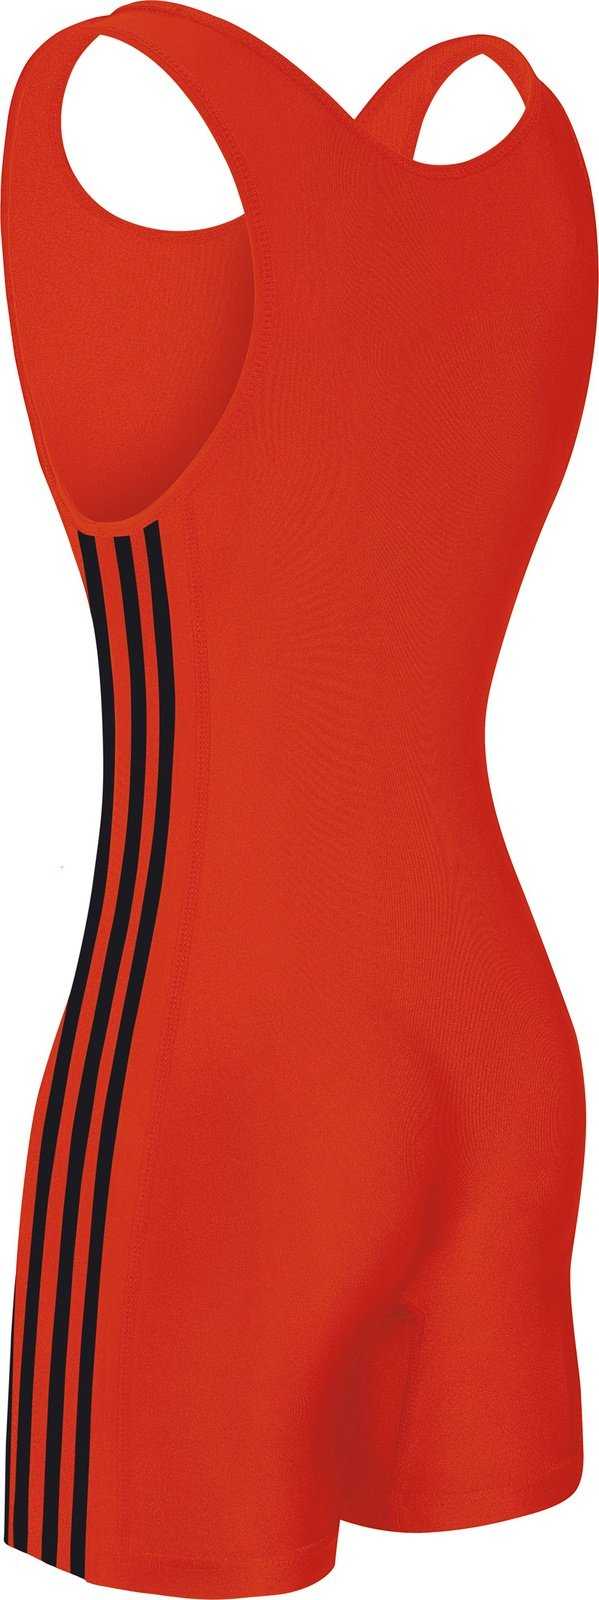 Adidas aS102s 3 Stripe Wrestling Singlet - Orange Black - HIT a Double